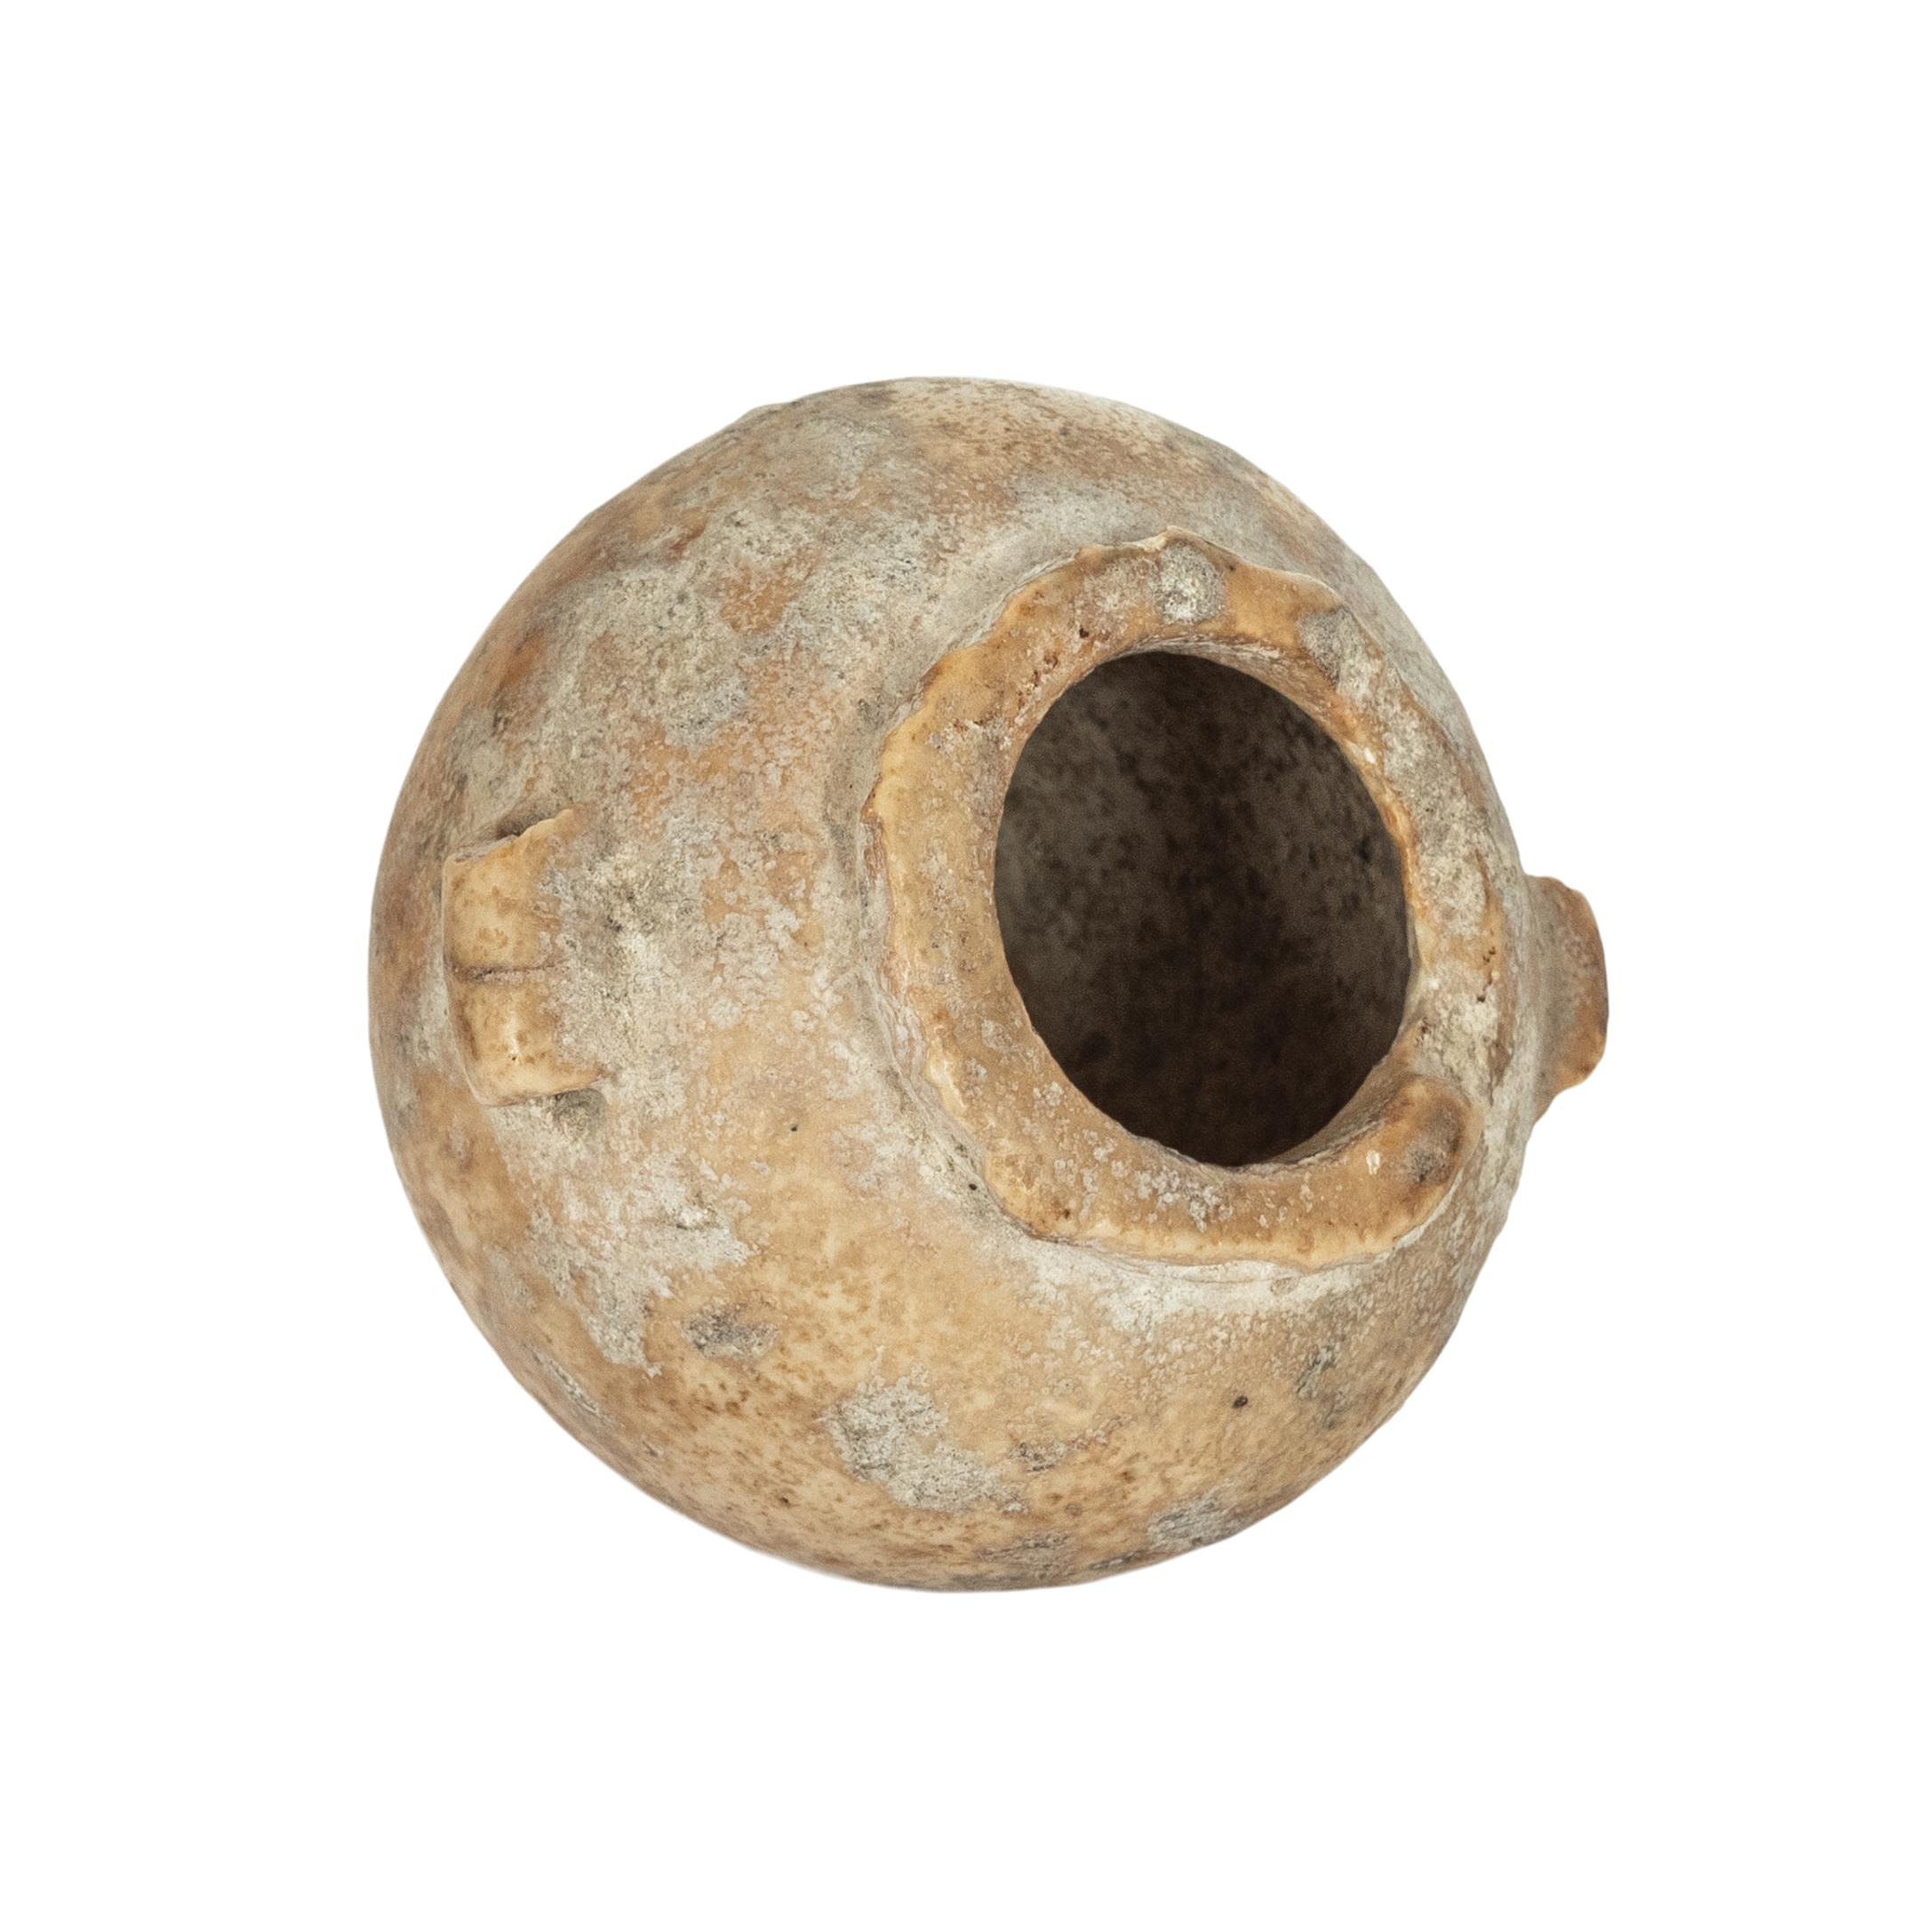 Ancient Egyptian Old Kingdom Miniature Lime Stone Vessel Jar 2600-2800 BCE For Sale 5